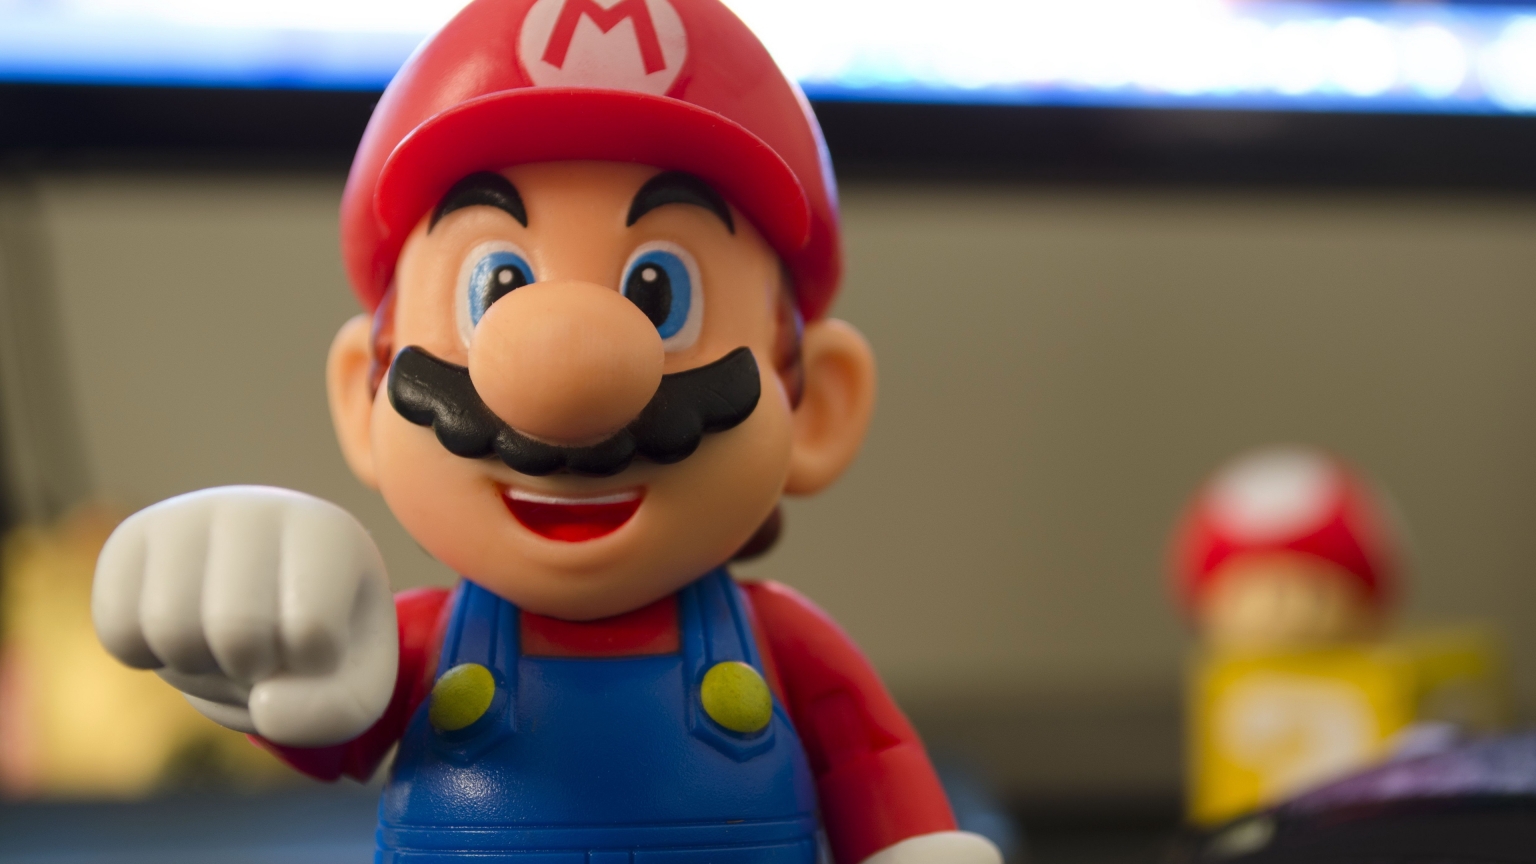 Super Mario Figurine for 1536 x 864 HDTV resolution